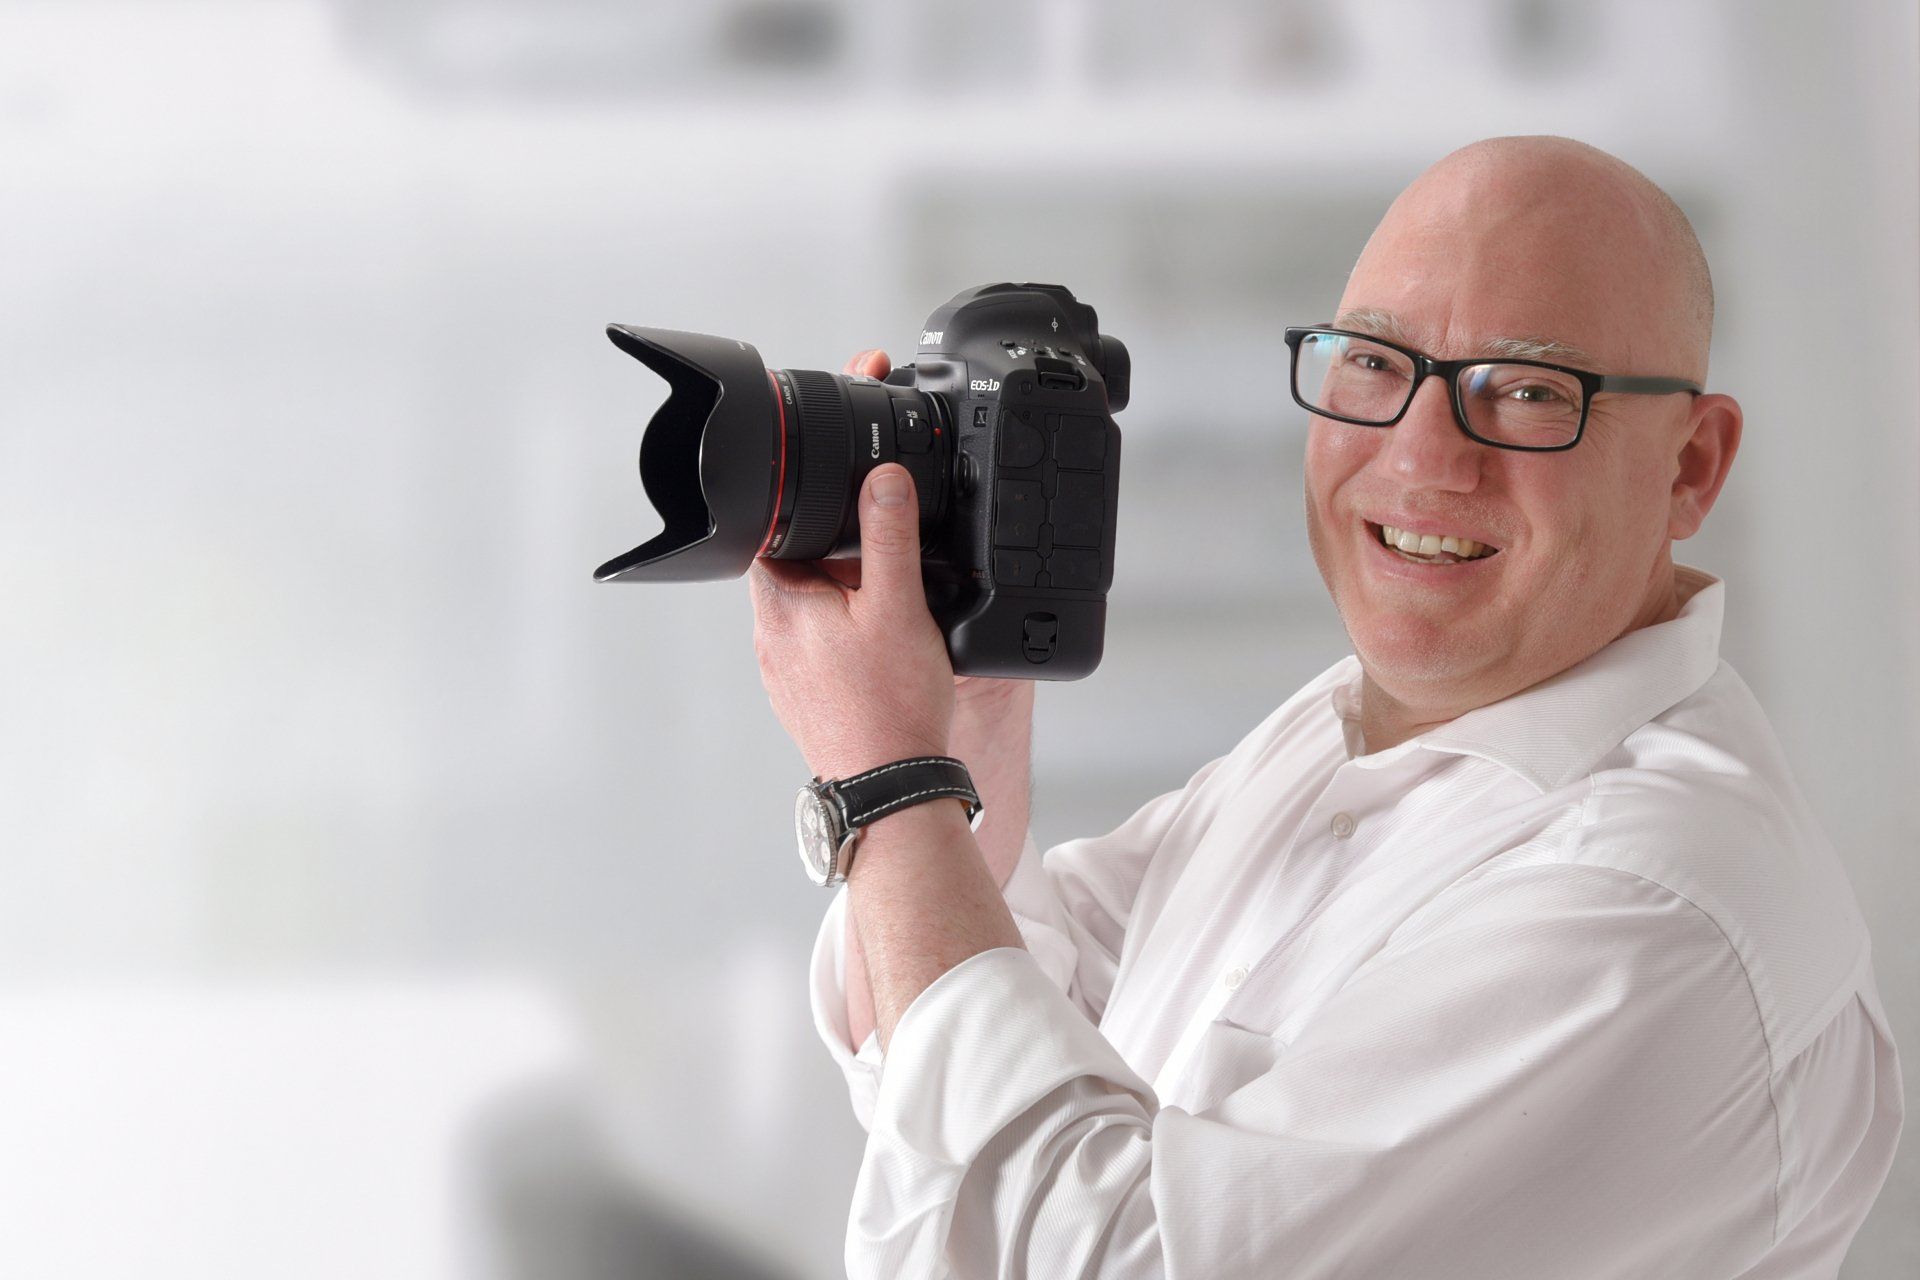 Der FOTOKURS NÜRNBERG Fototrainer Alexander Mrosek lächelt den Bildbetrachter entgegen.